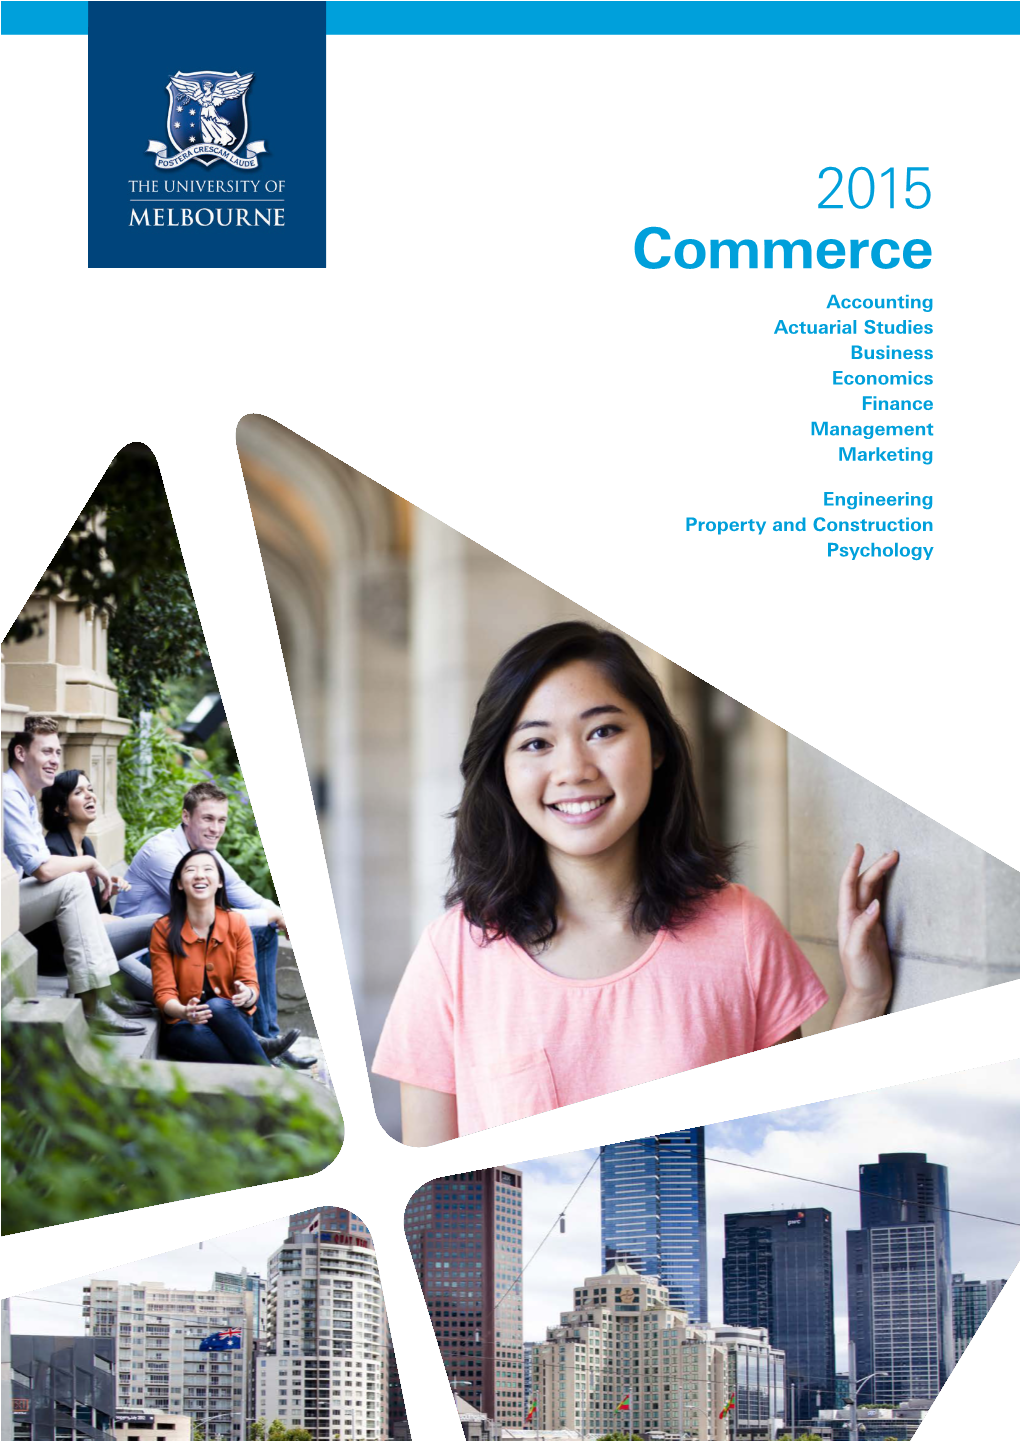 2015 Commerce Accounting Actuarial Studies Business Economics Finance Management Marketing